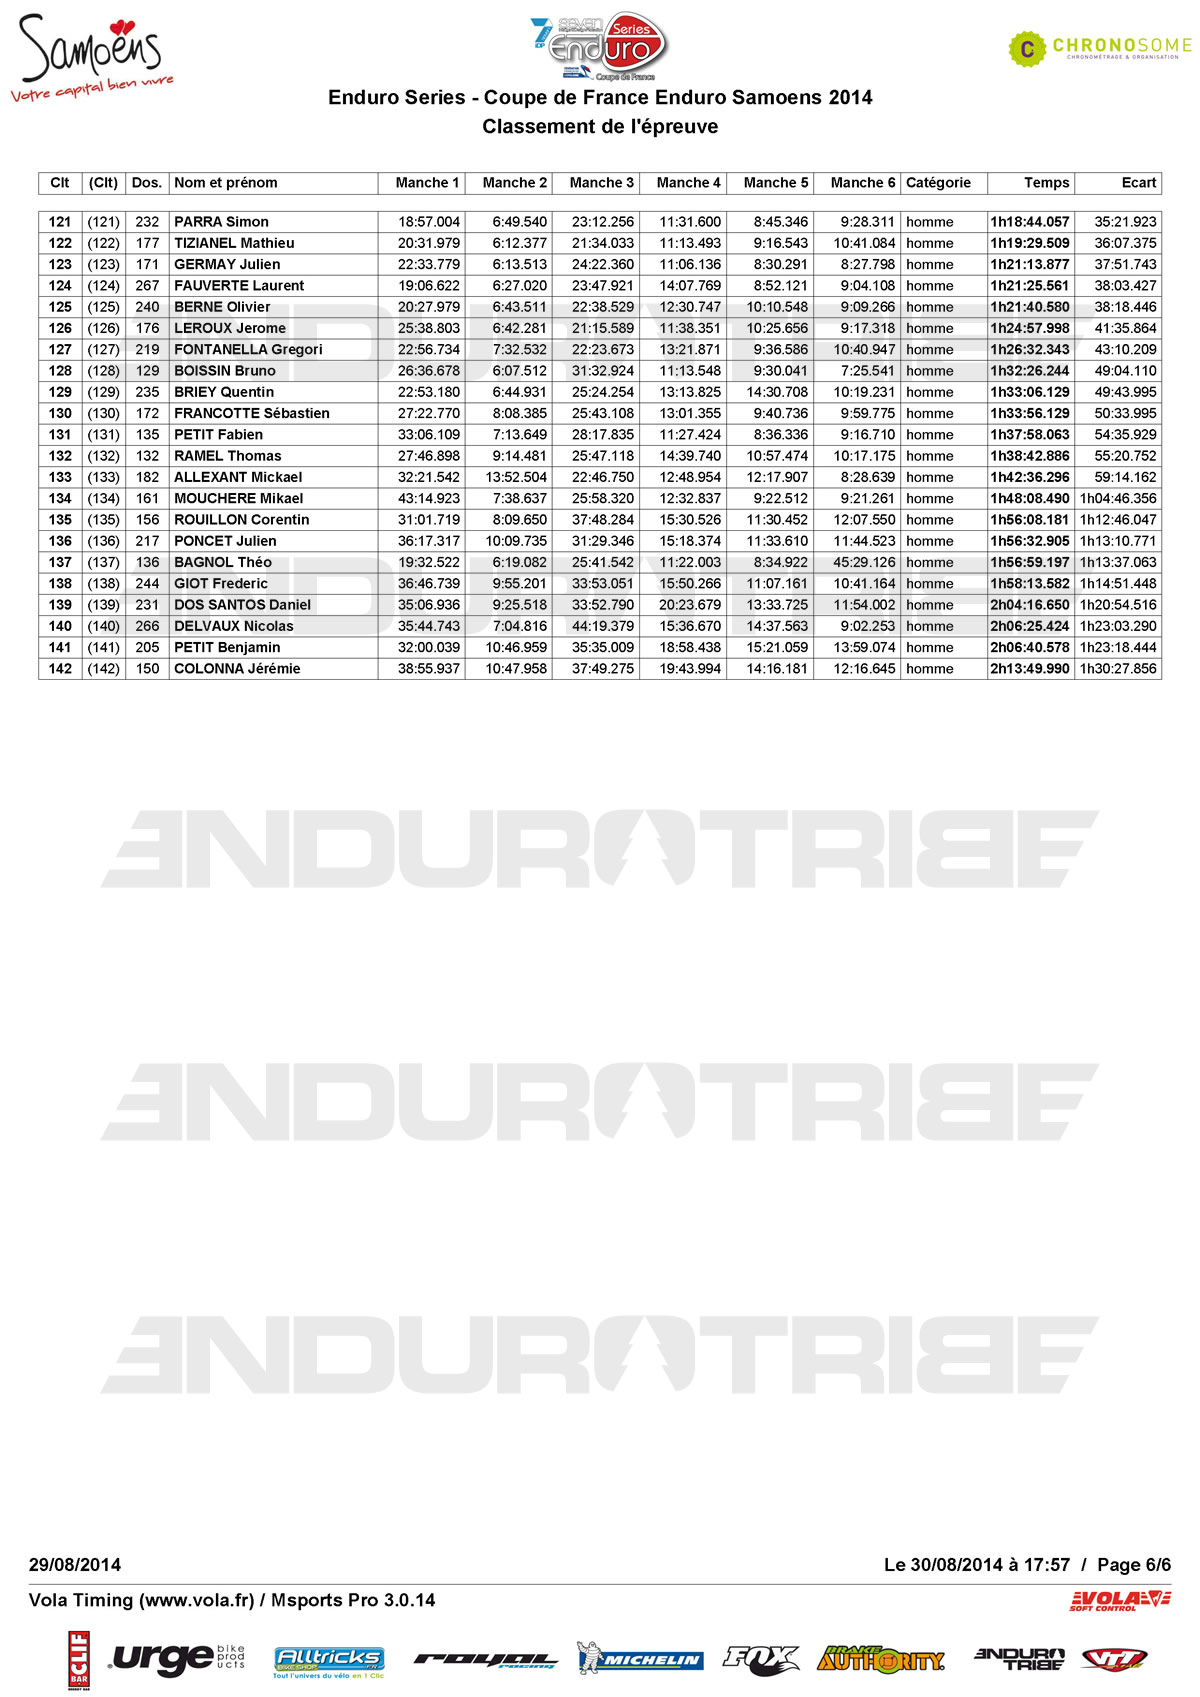 Enduro Series - Coupe de France Enduro Samoens - Samedi par categories_Page_6